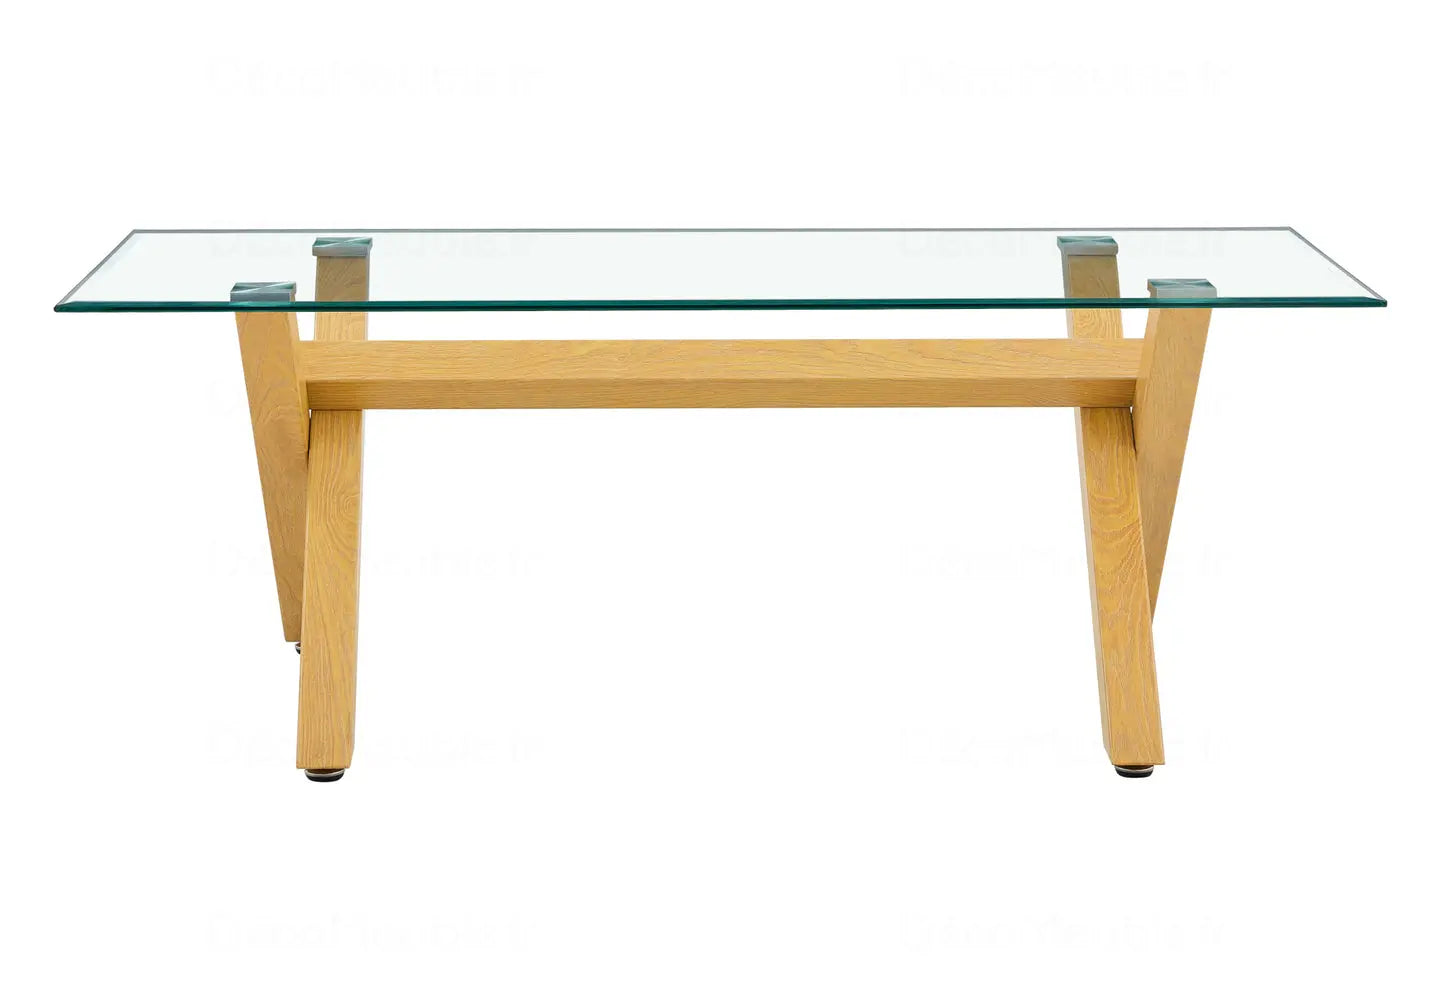 Table basse en verre pied bois CROSS New Design